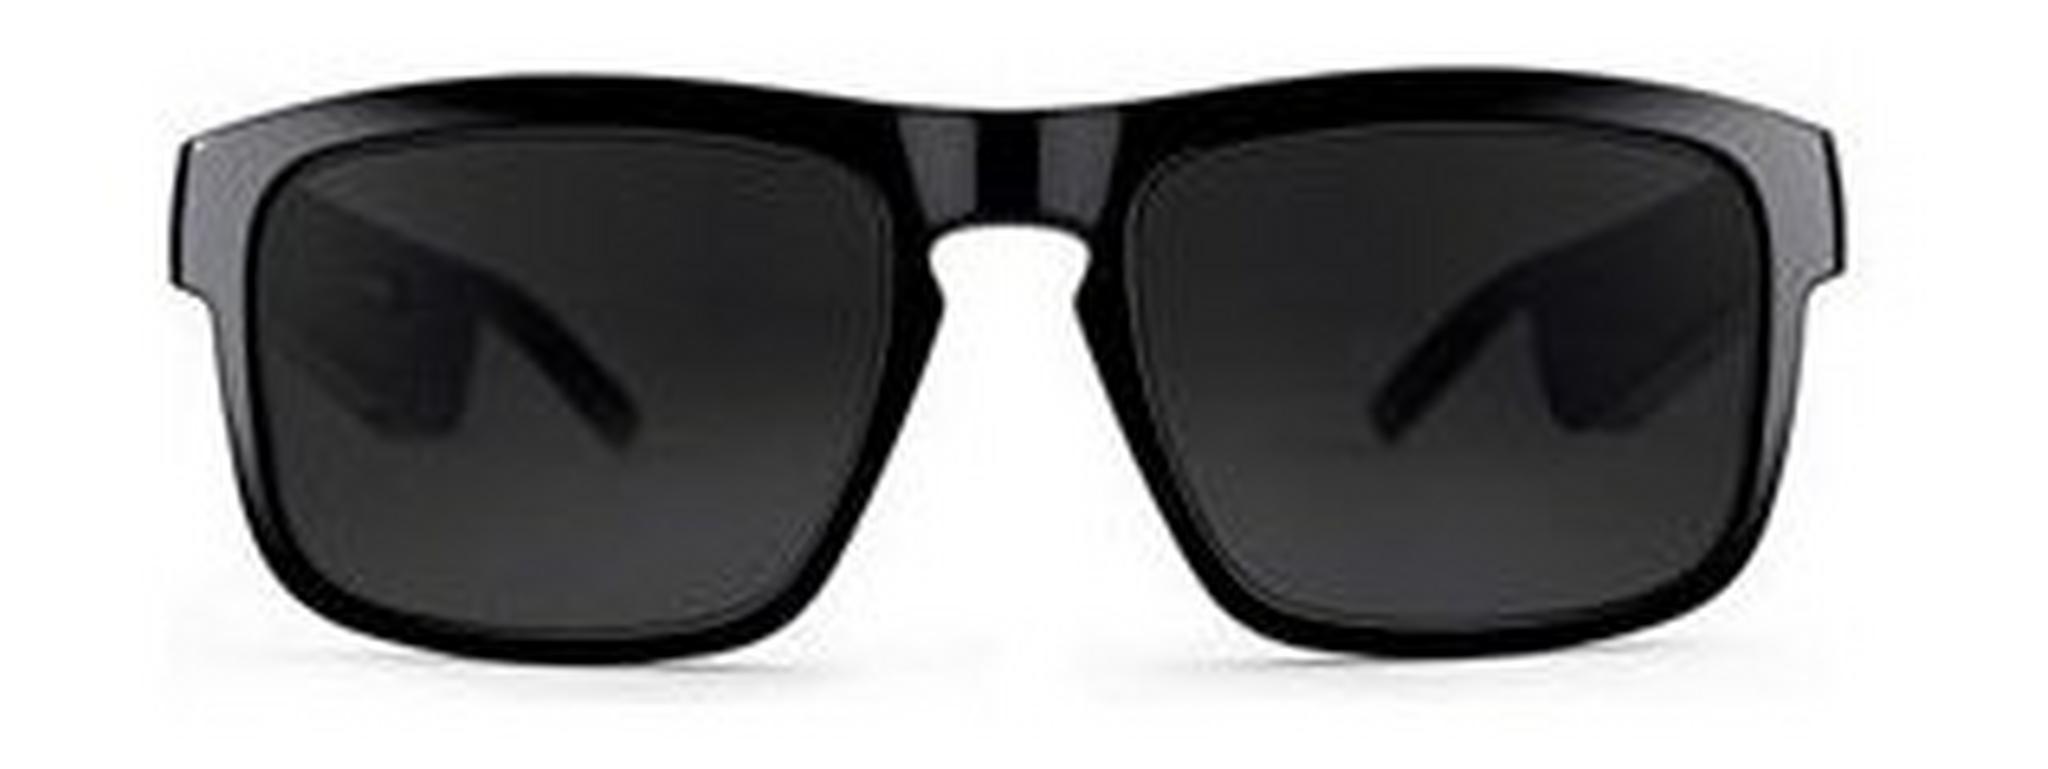 Bose Frames Tenor Sunglasses (851340-0100) - Black